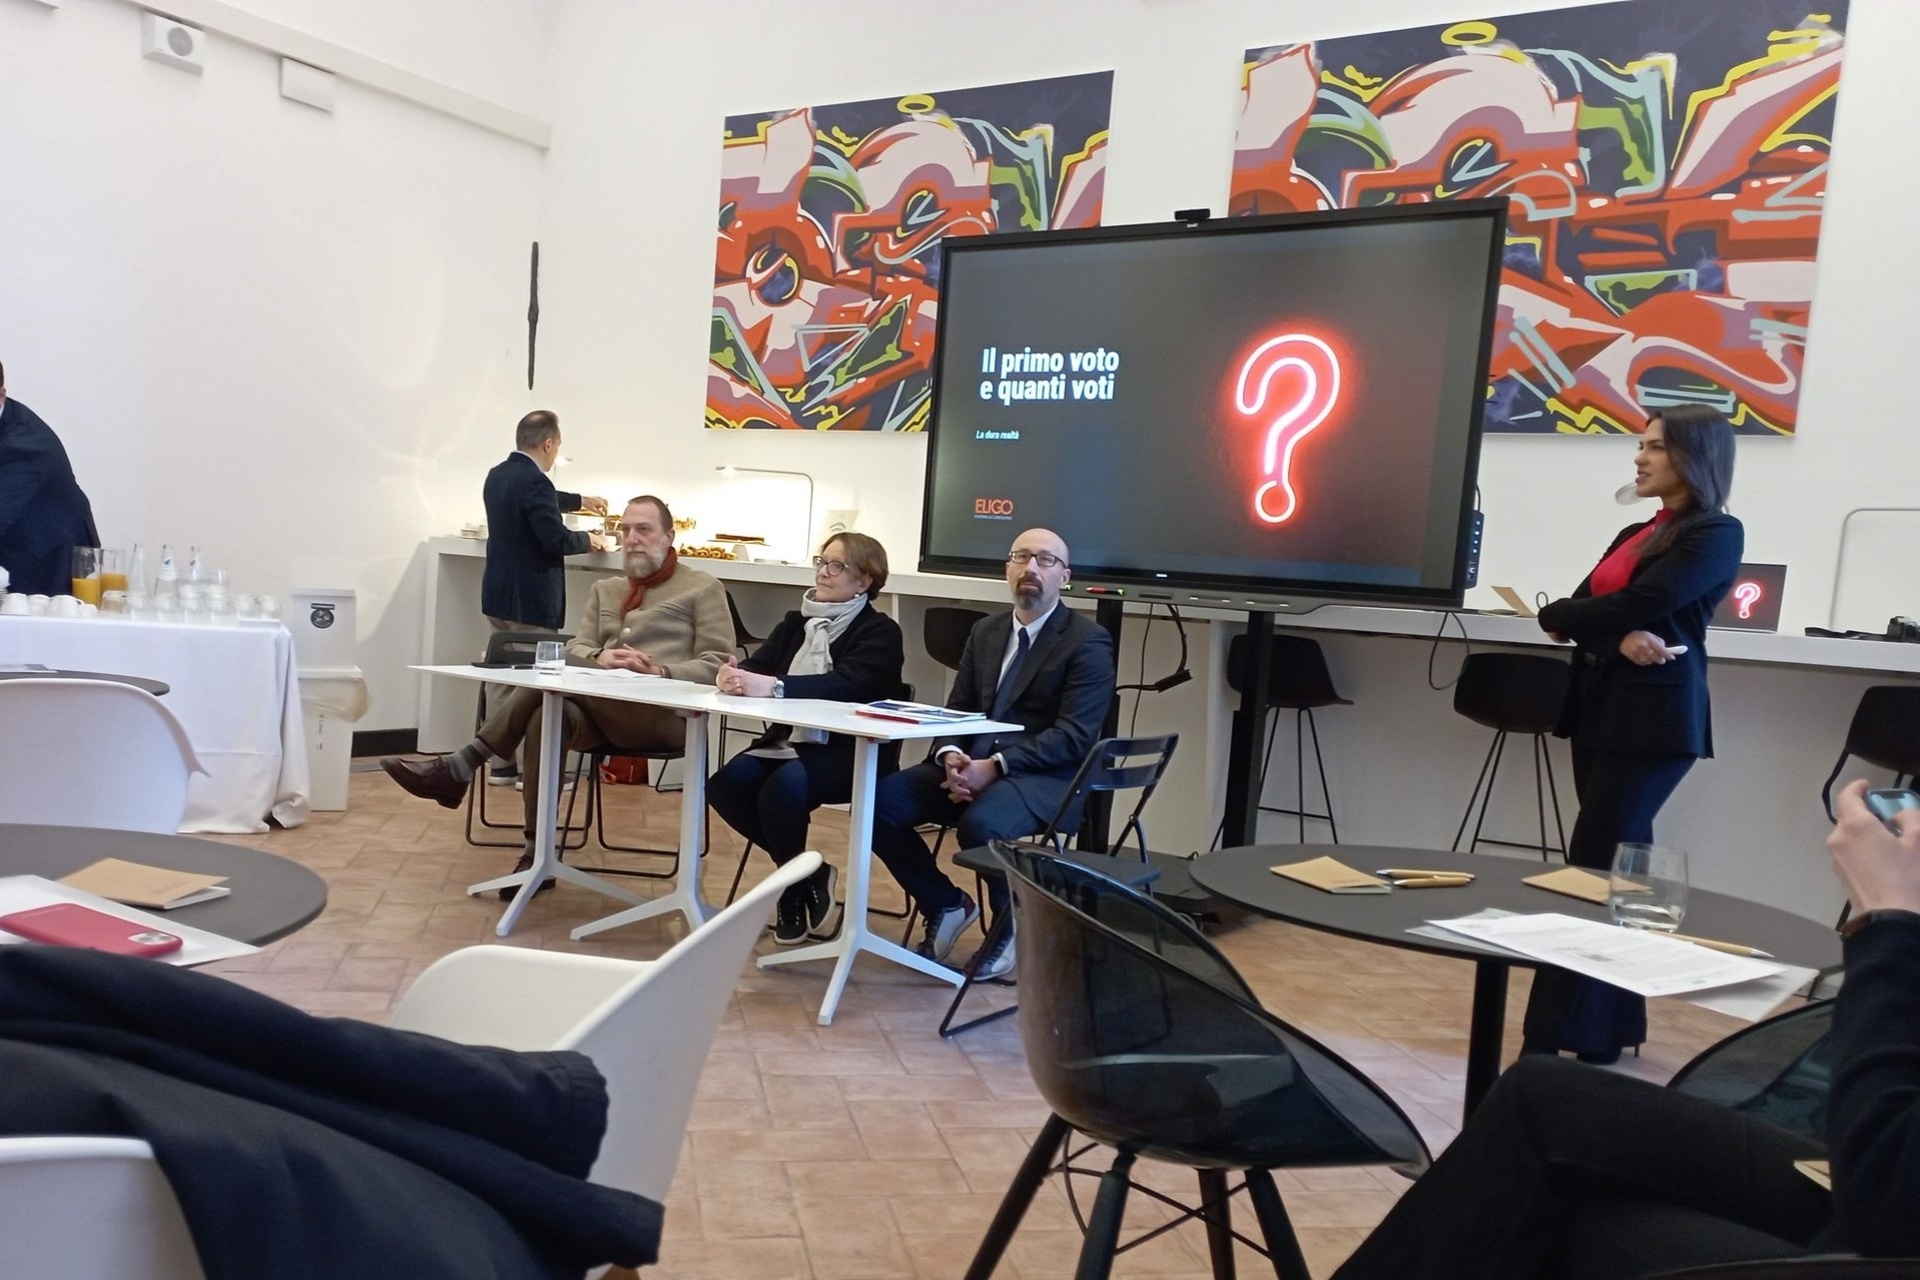 Eligo Next: ミラノで開催された新しい Eligo Next 電子およびオンライン投票プラットフォームの発表 (同社の CEO、Irene Pugliatti による)